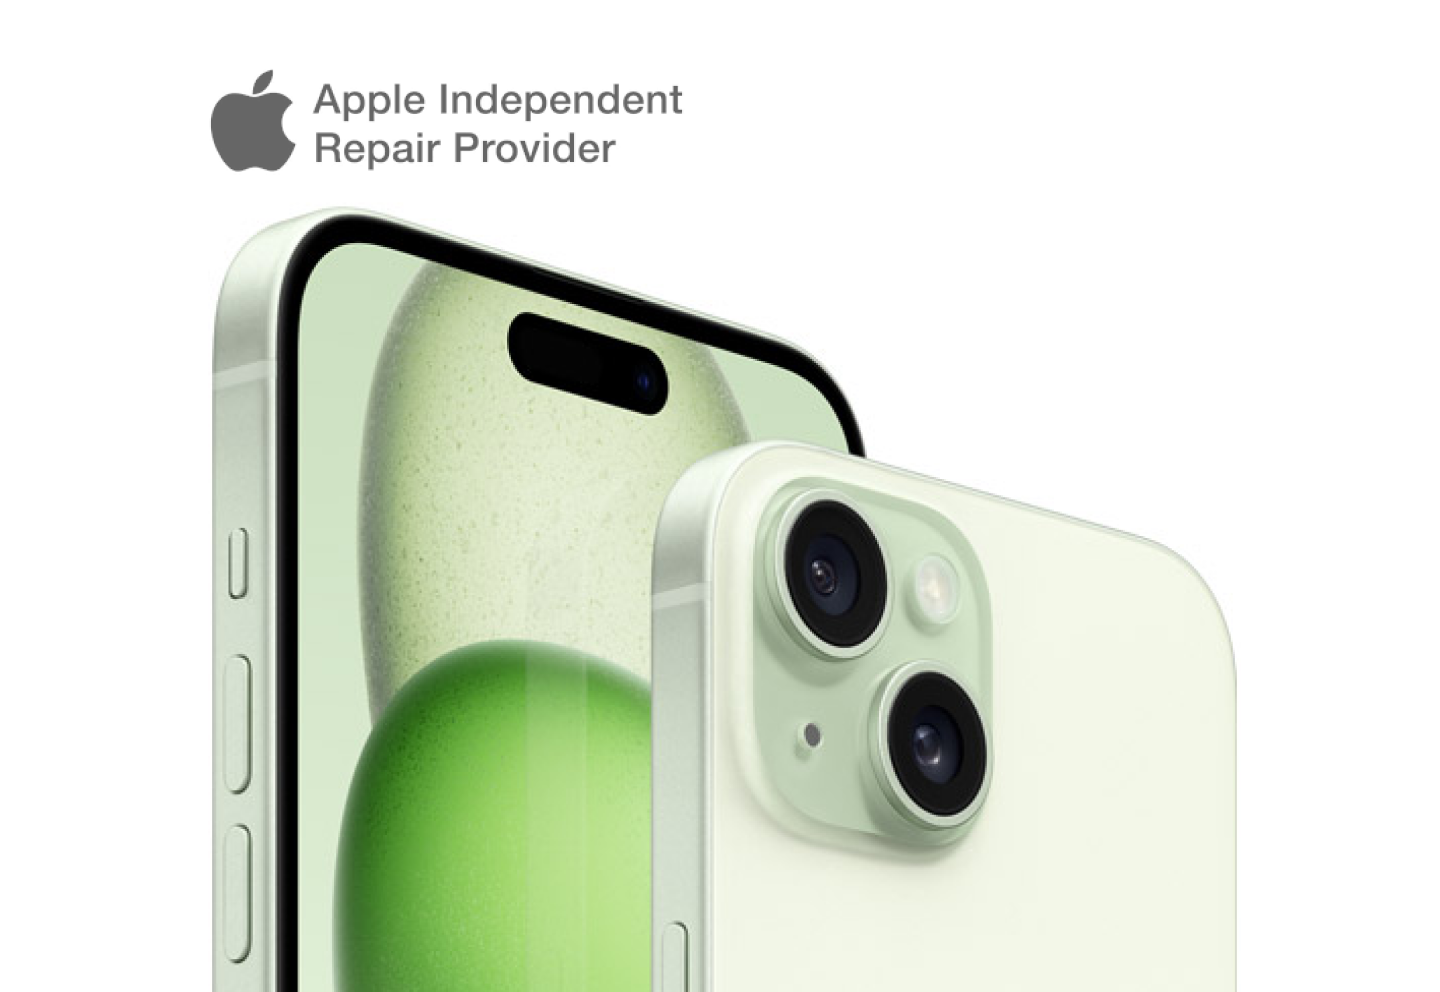 Apple Independent Repair Provider